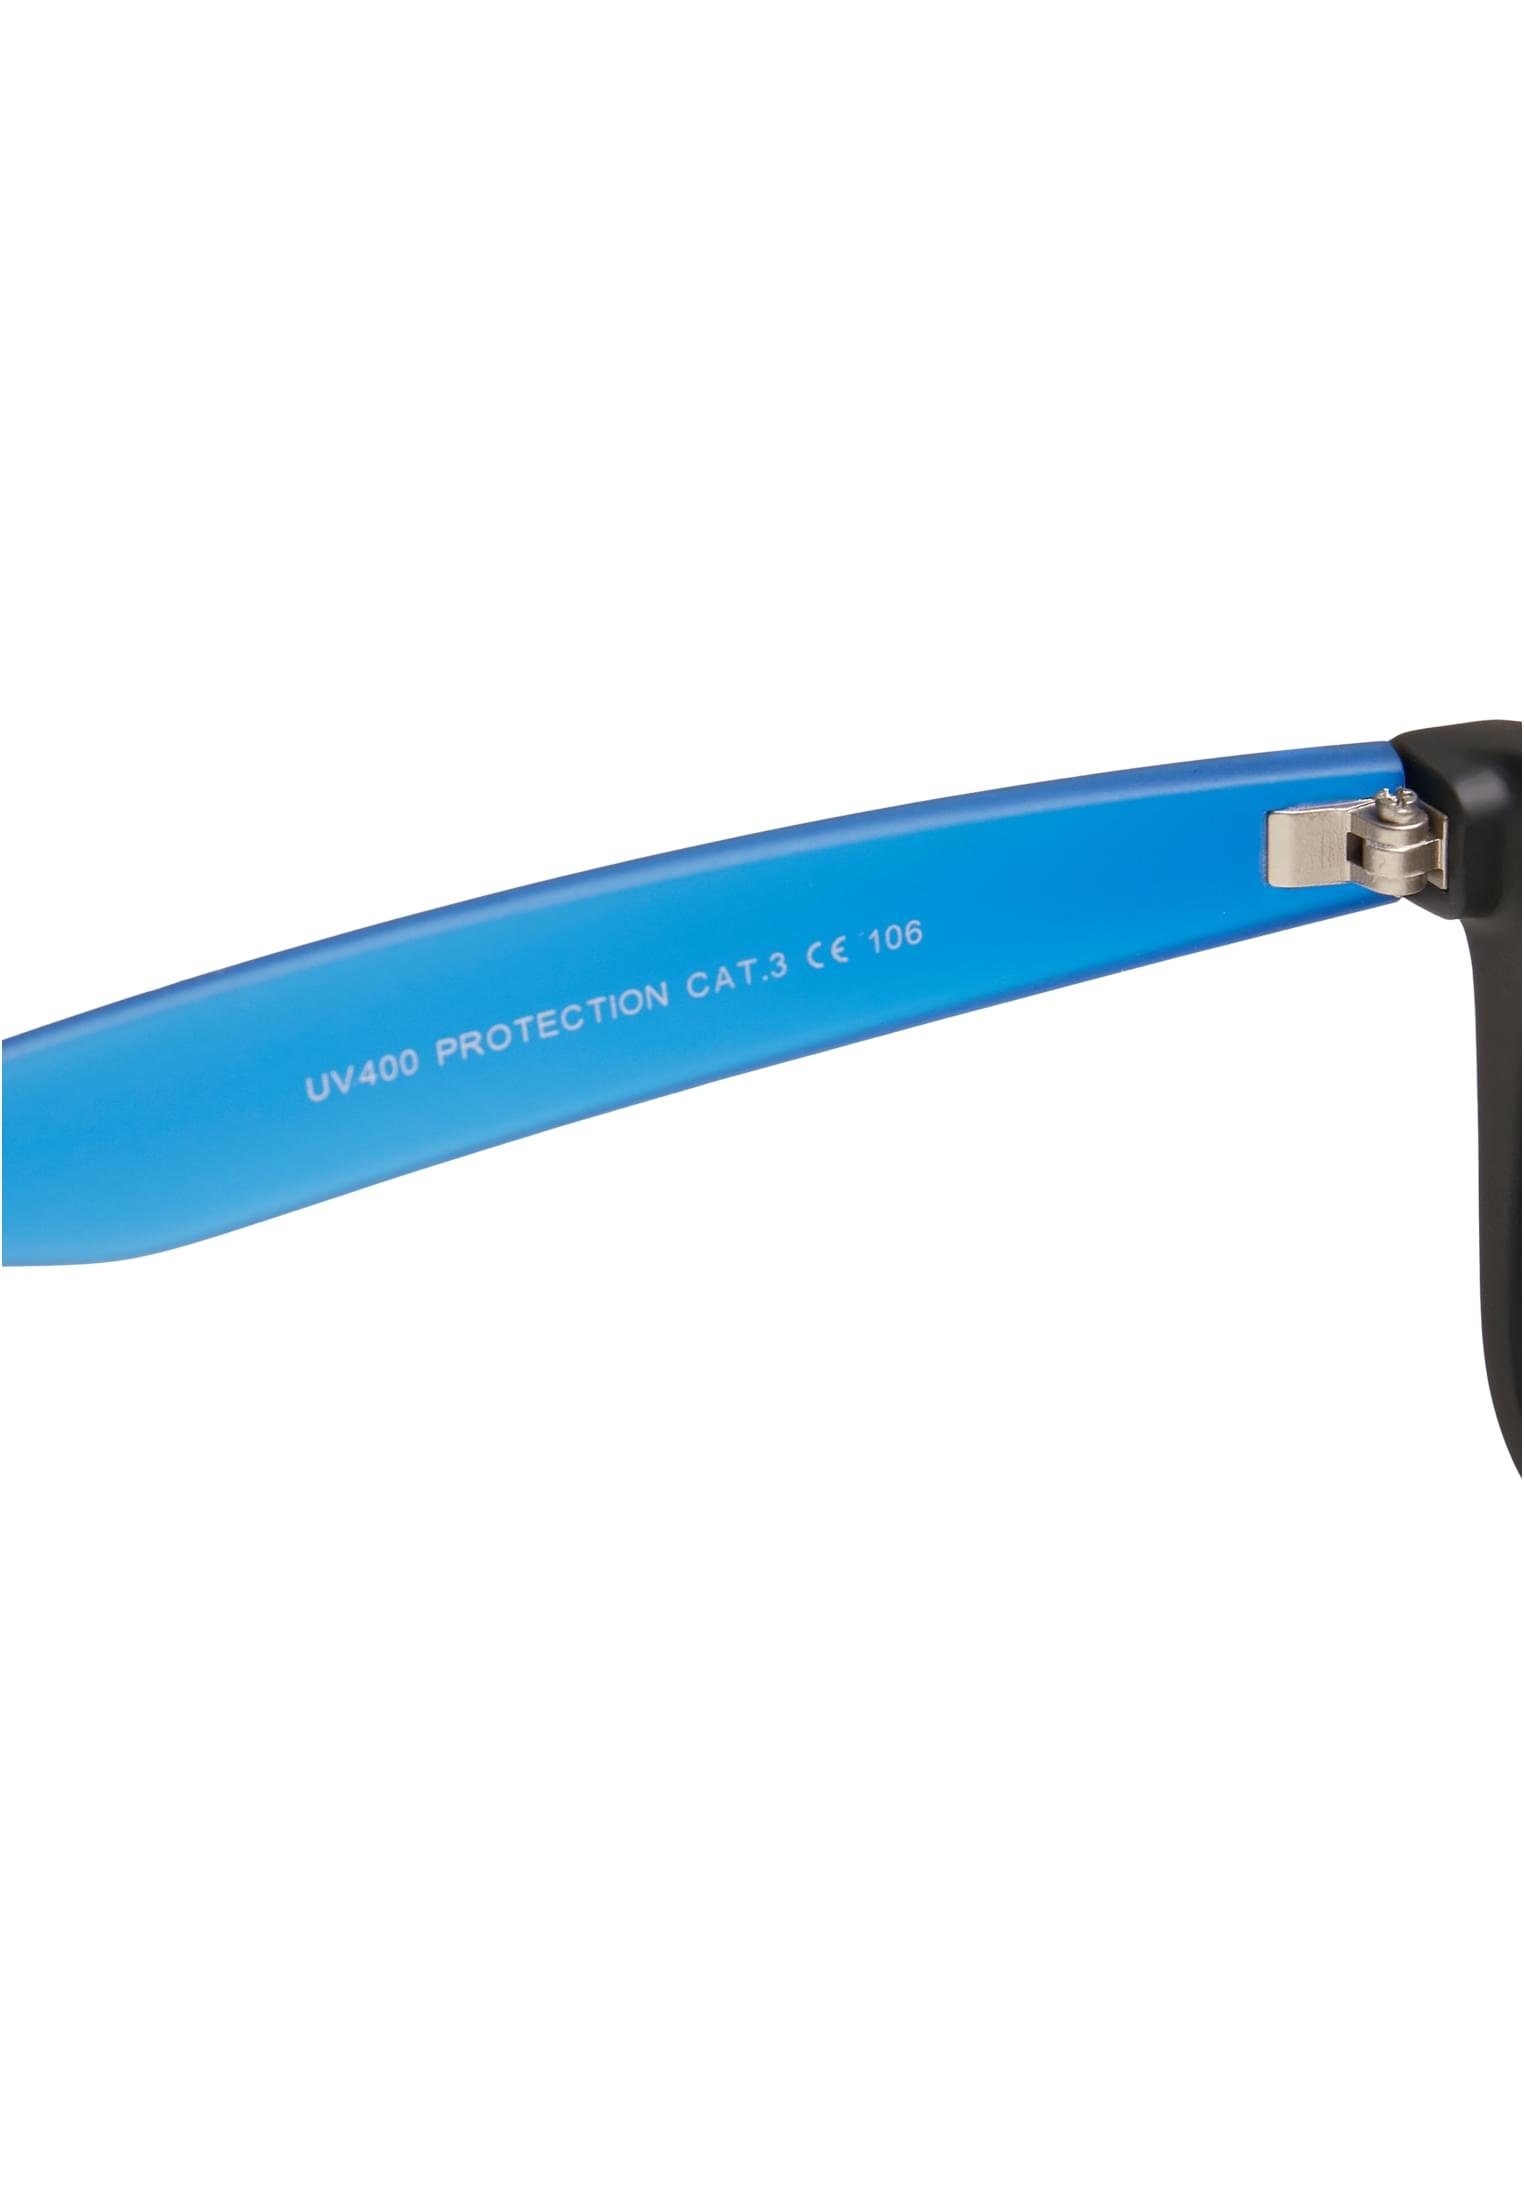 UC Accessoires Likoma CLASSICS Sunglasses Mirror Sonnenbrille black/blue URBAN